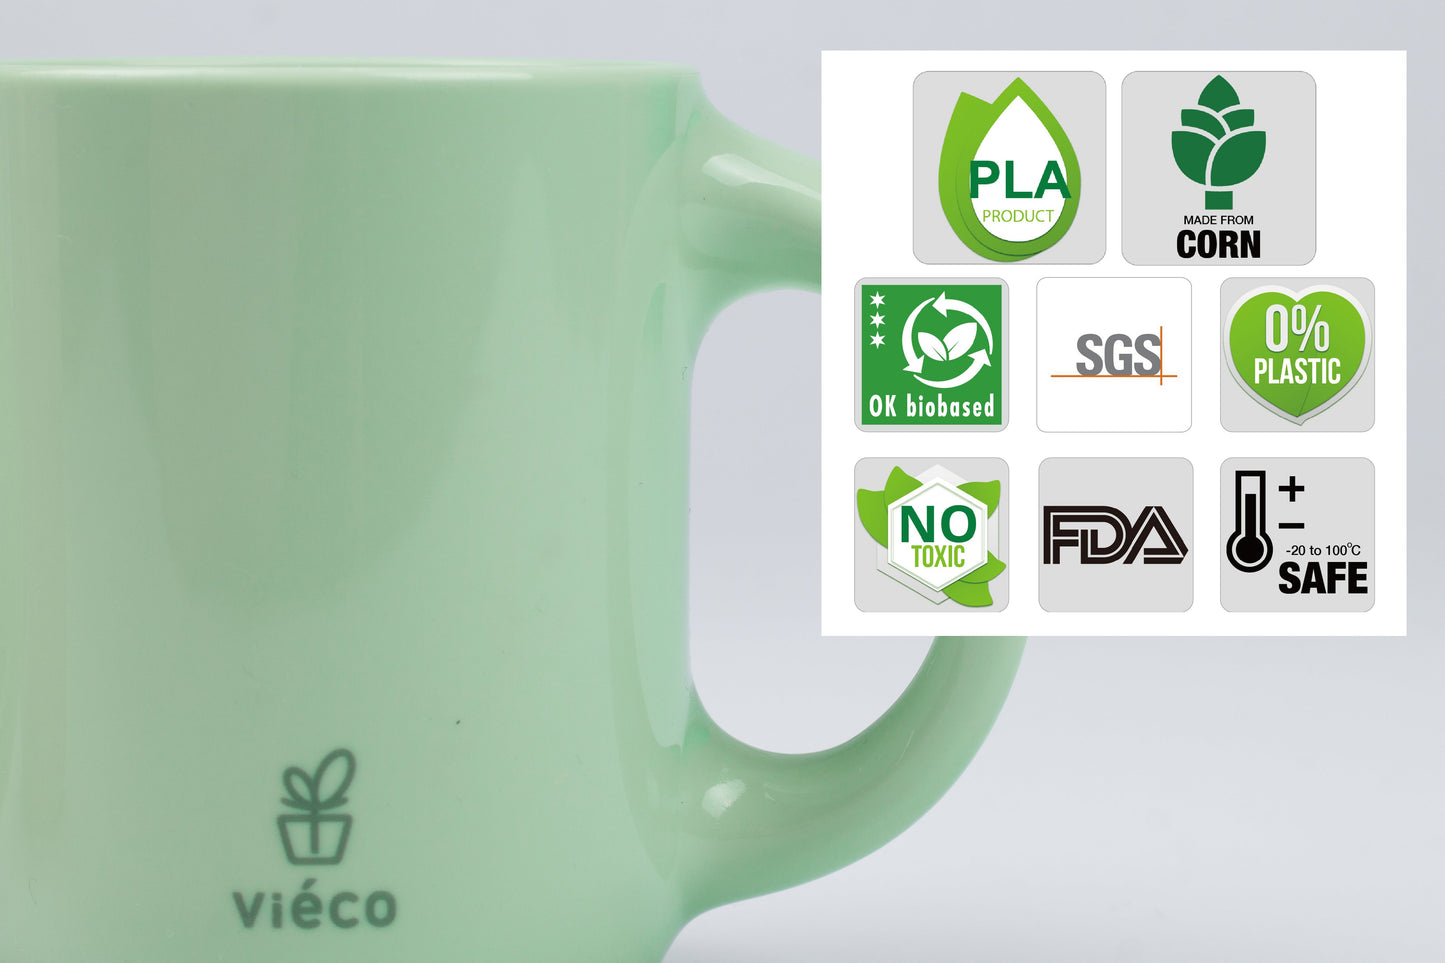 Viéco 2 easy-grip handles eco friendly cup - starcopia design store